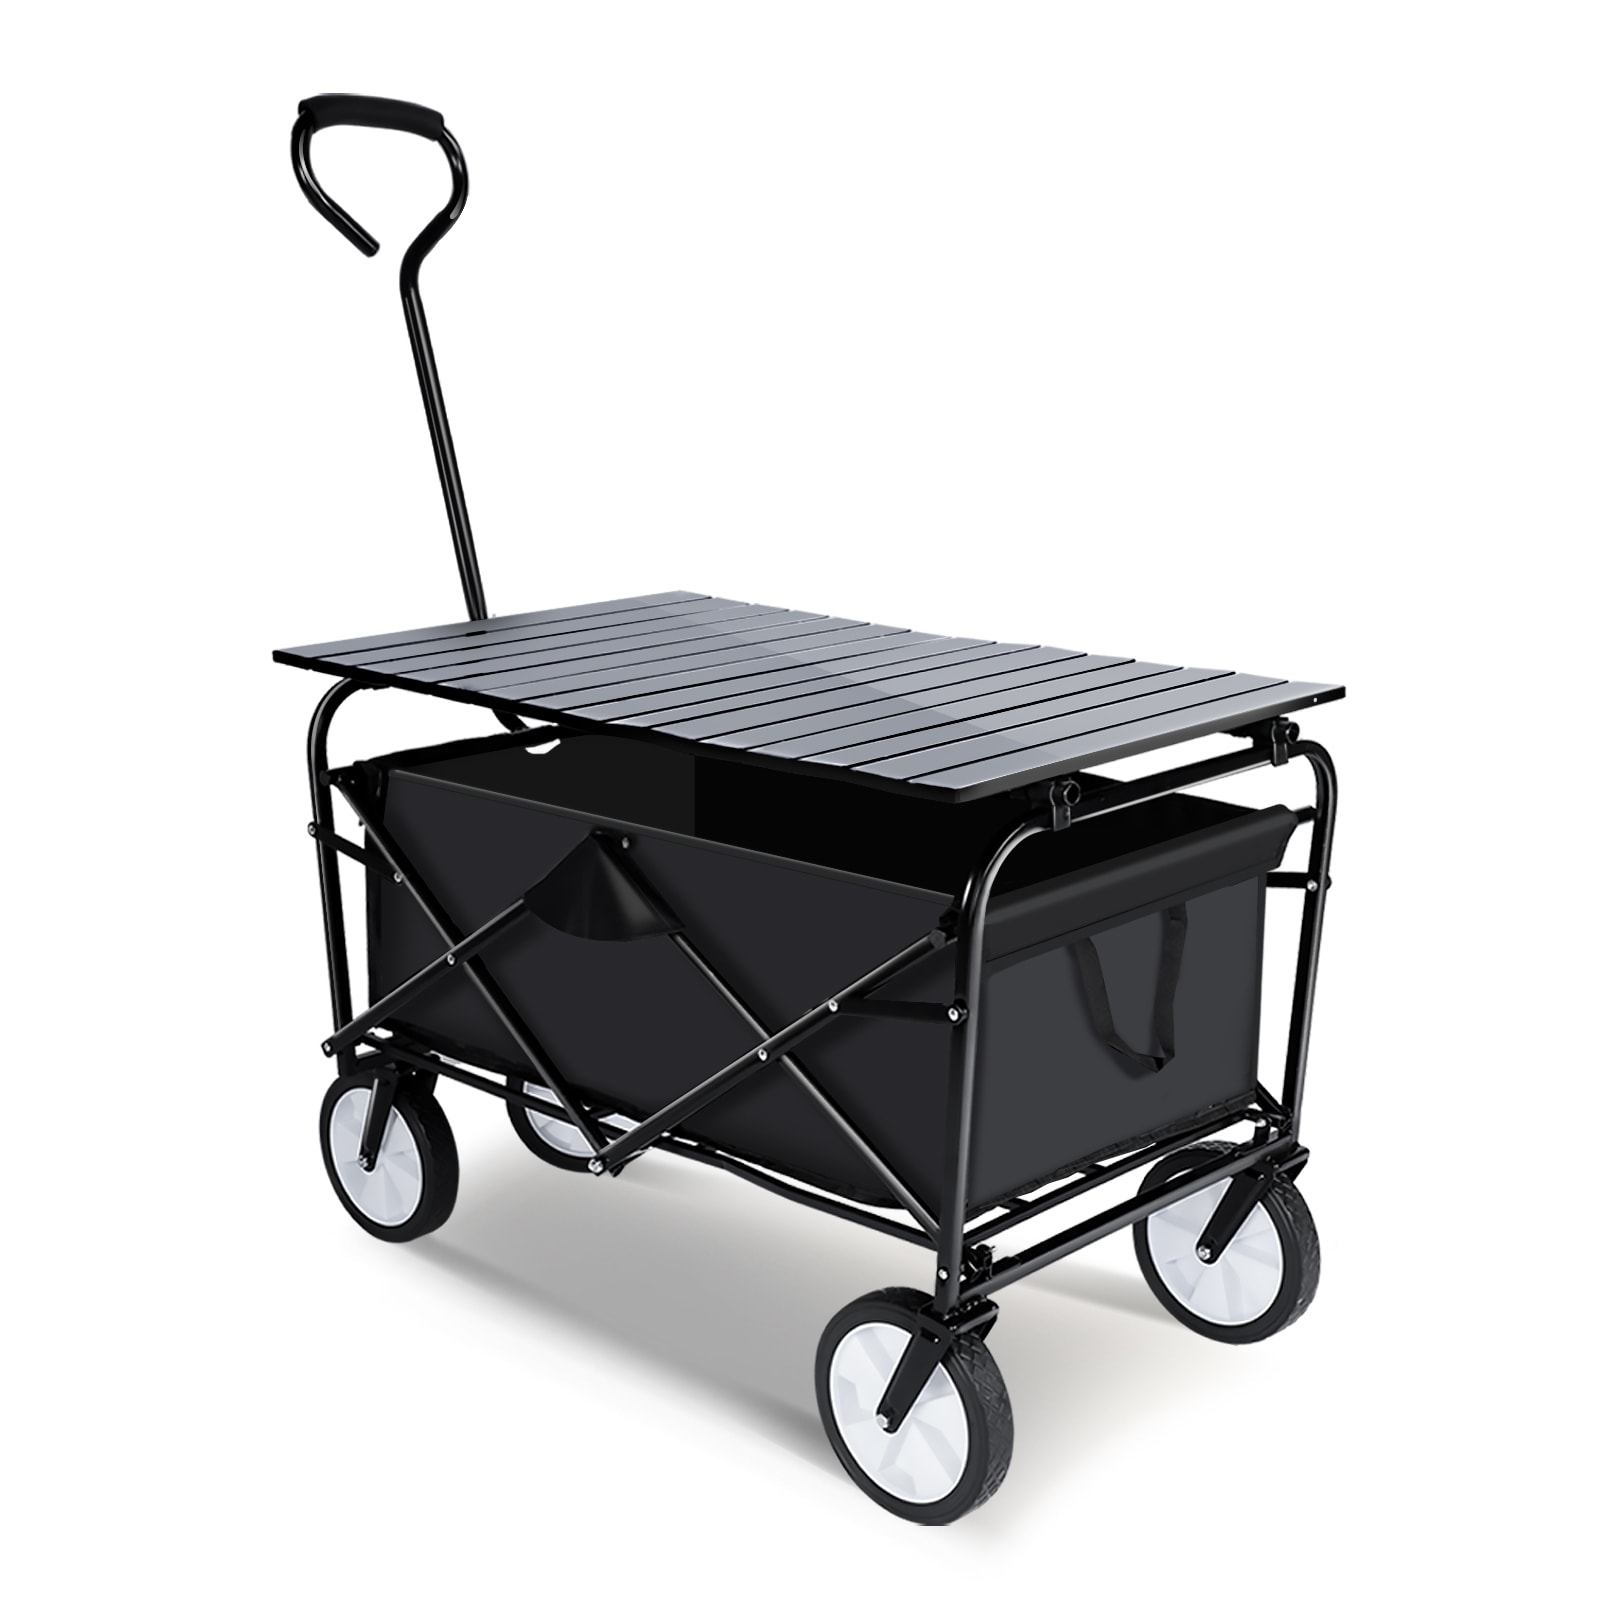 Outsunny Folding Wagon Cart, Outdoor Utility Wagon Heavy Duty